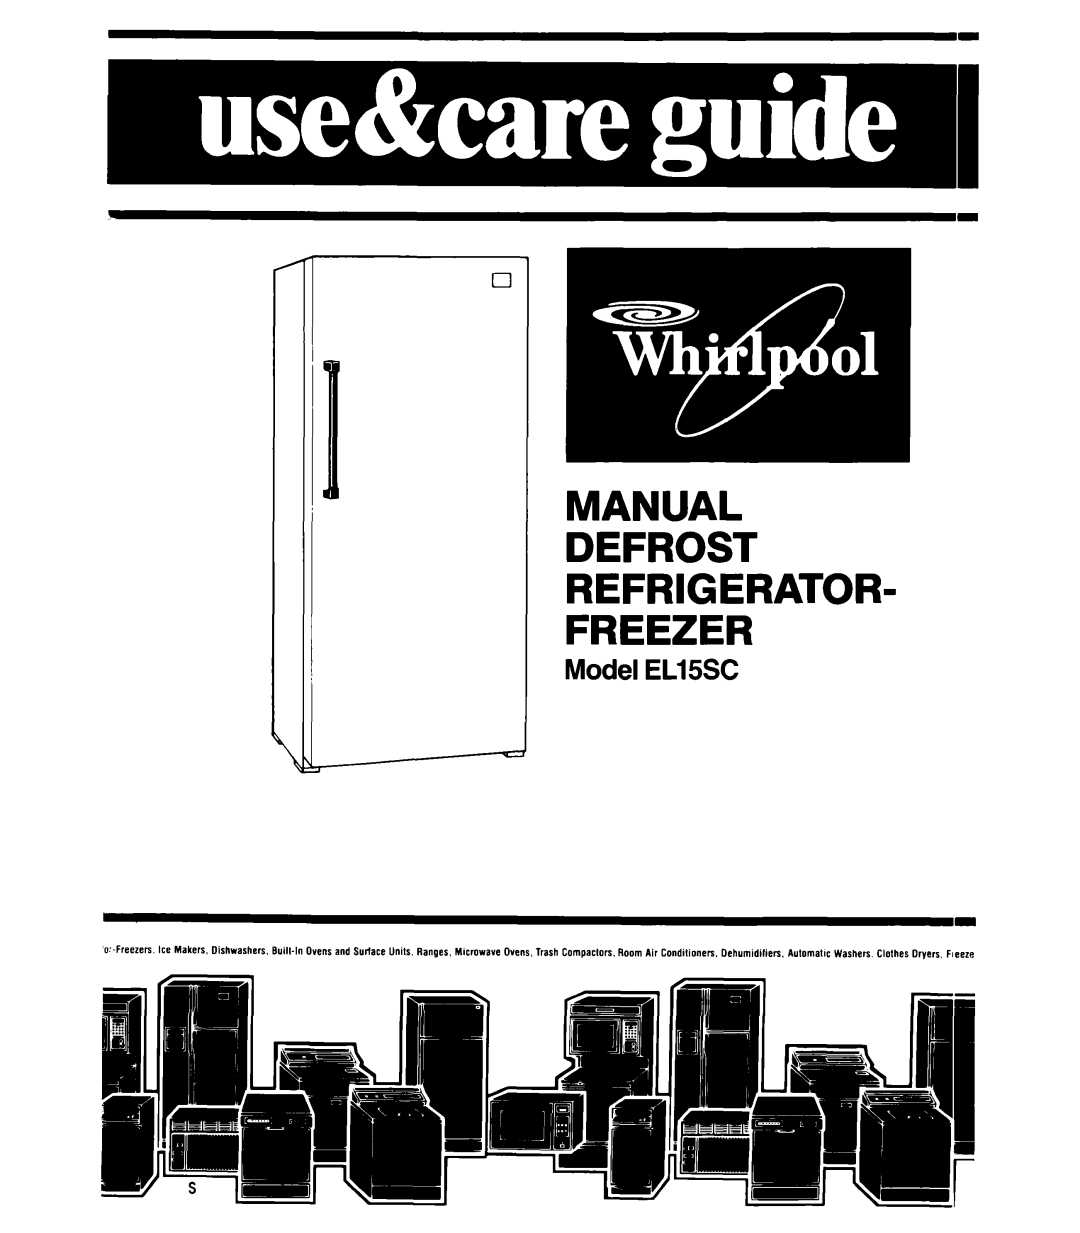 Whirlpool manual Model EL15SC, Manual Defrost Refrigerator Freezer 